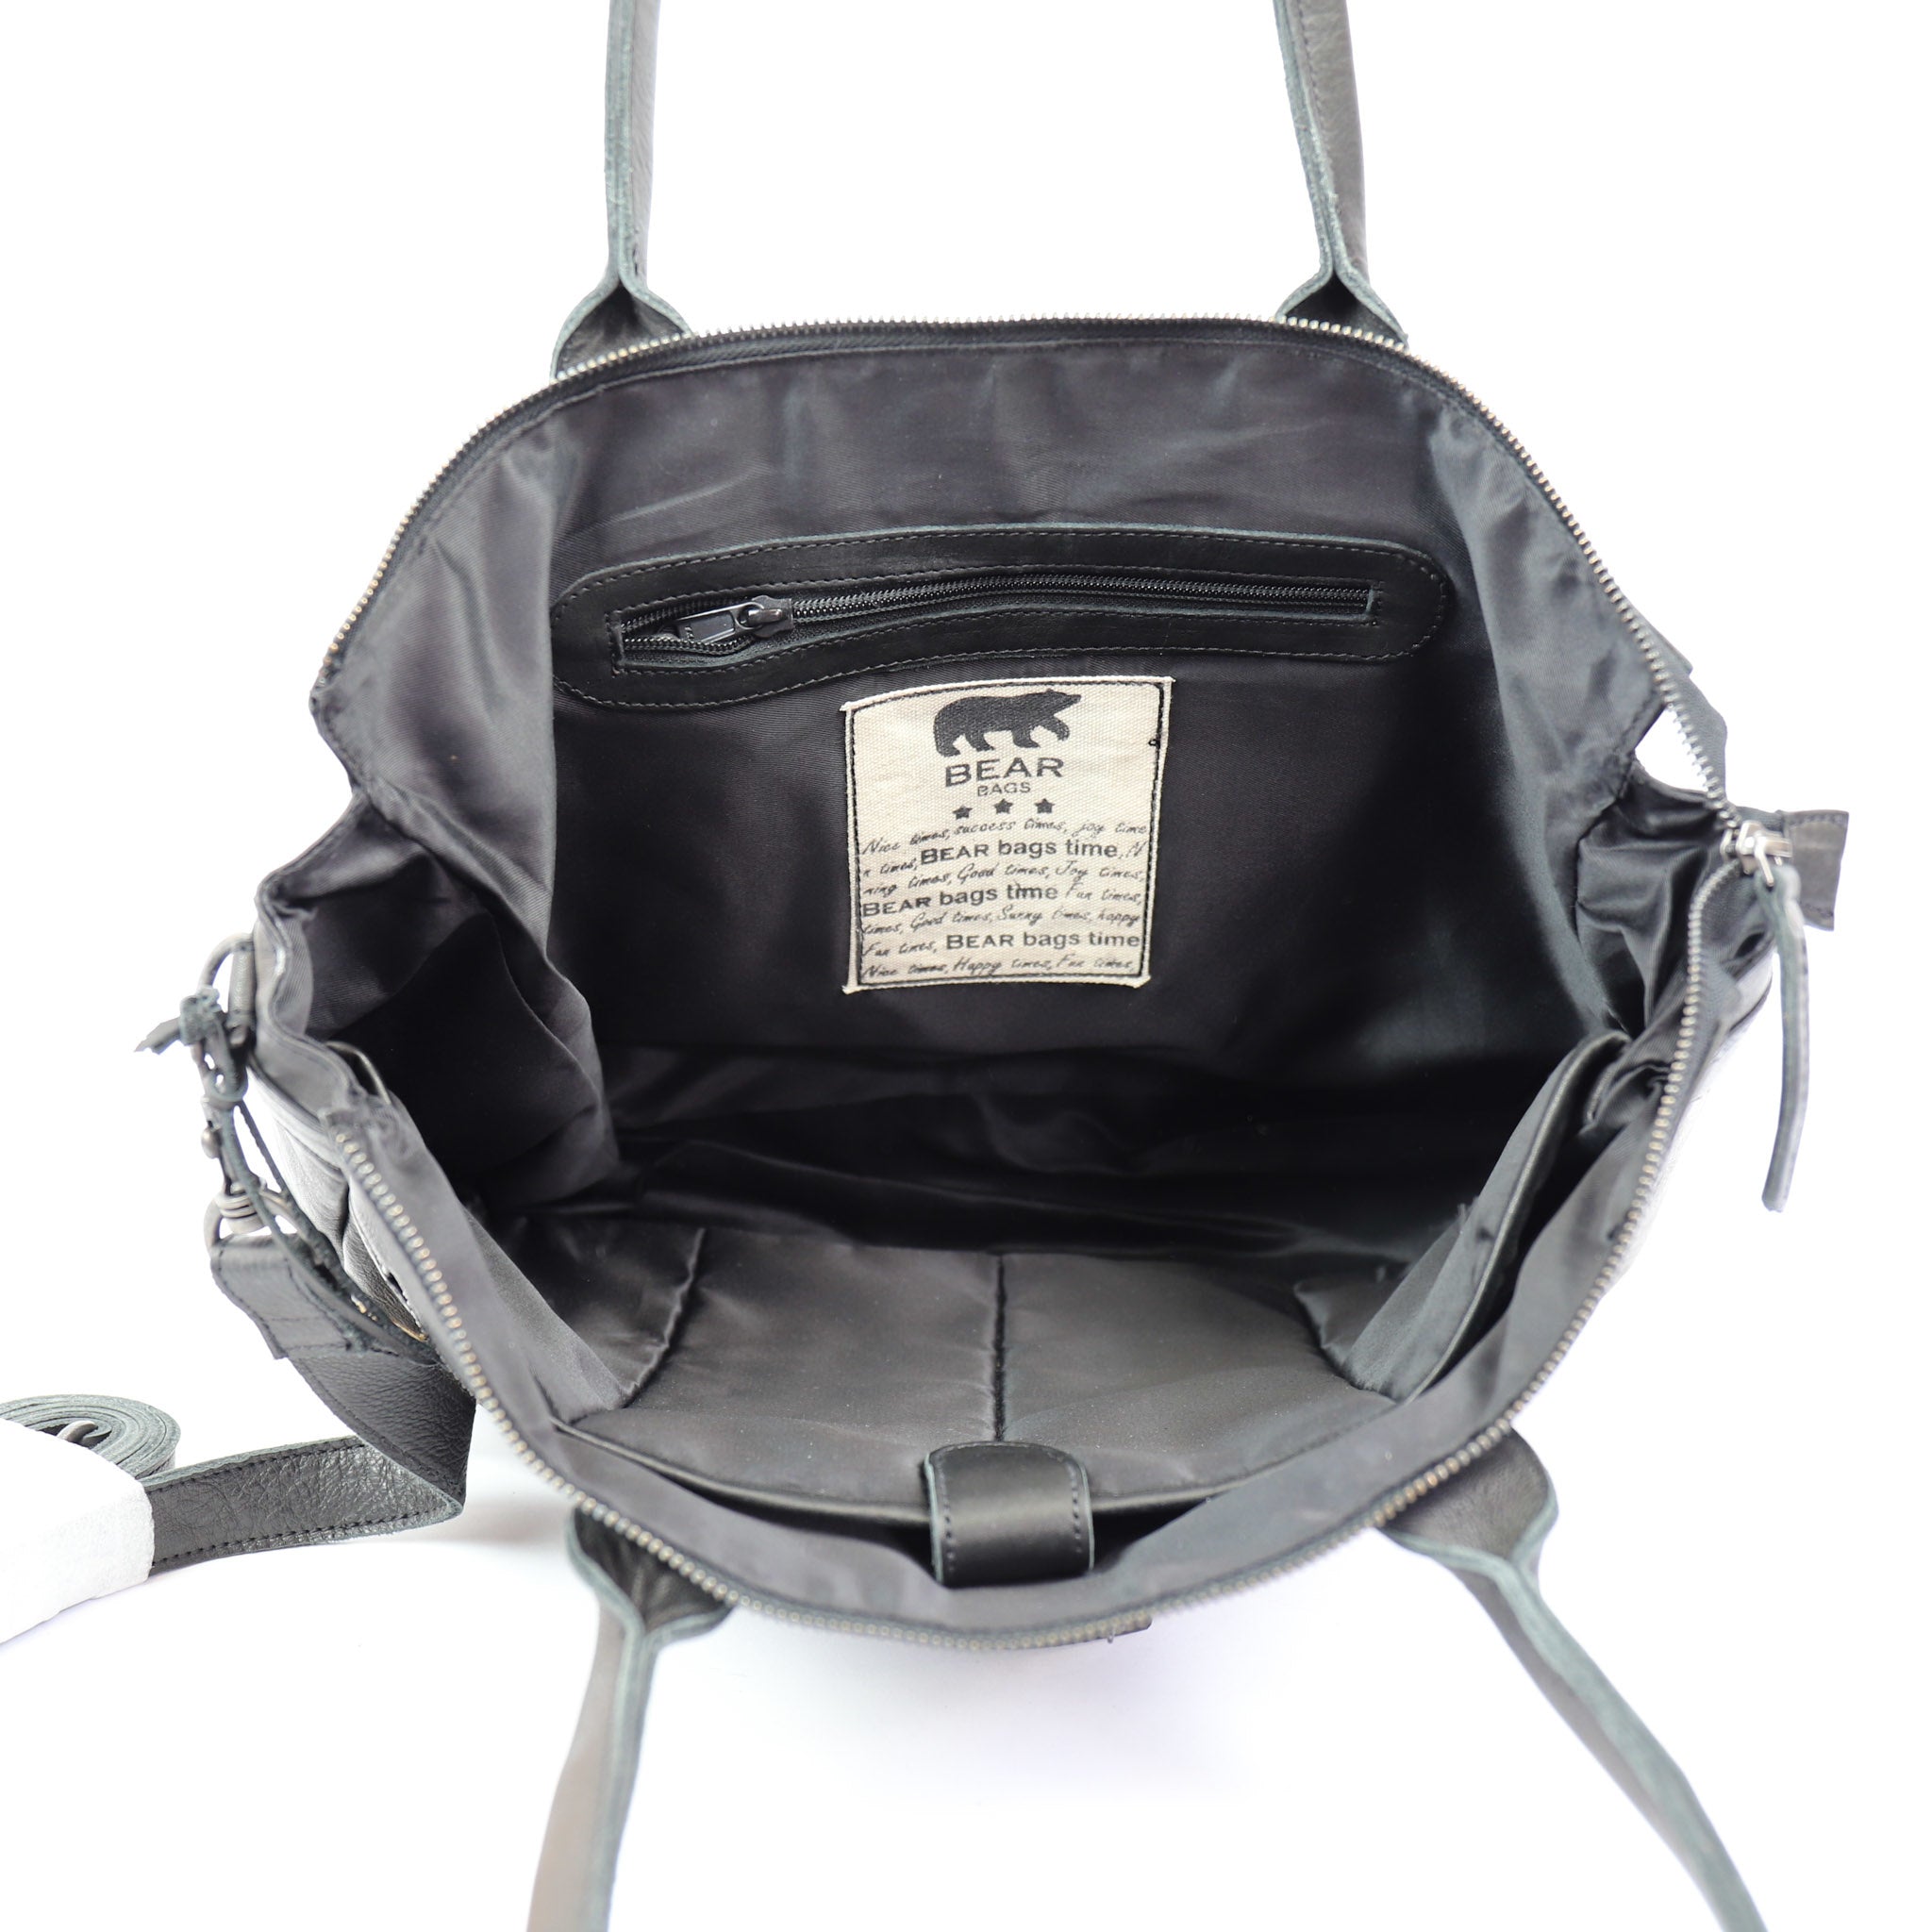 Hand/shoulder bag 'Binni' black - CP 1657